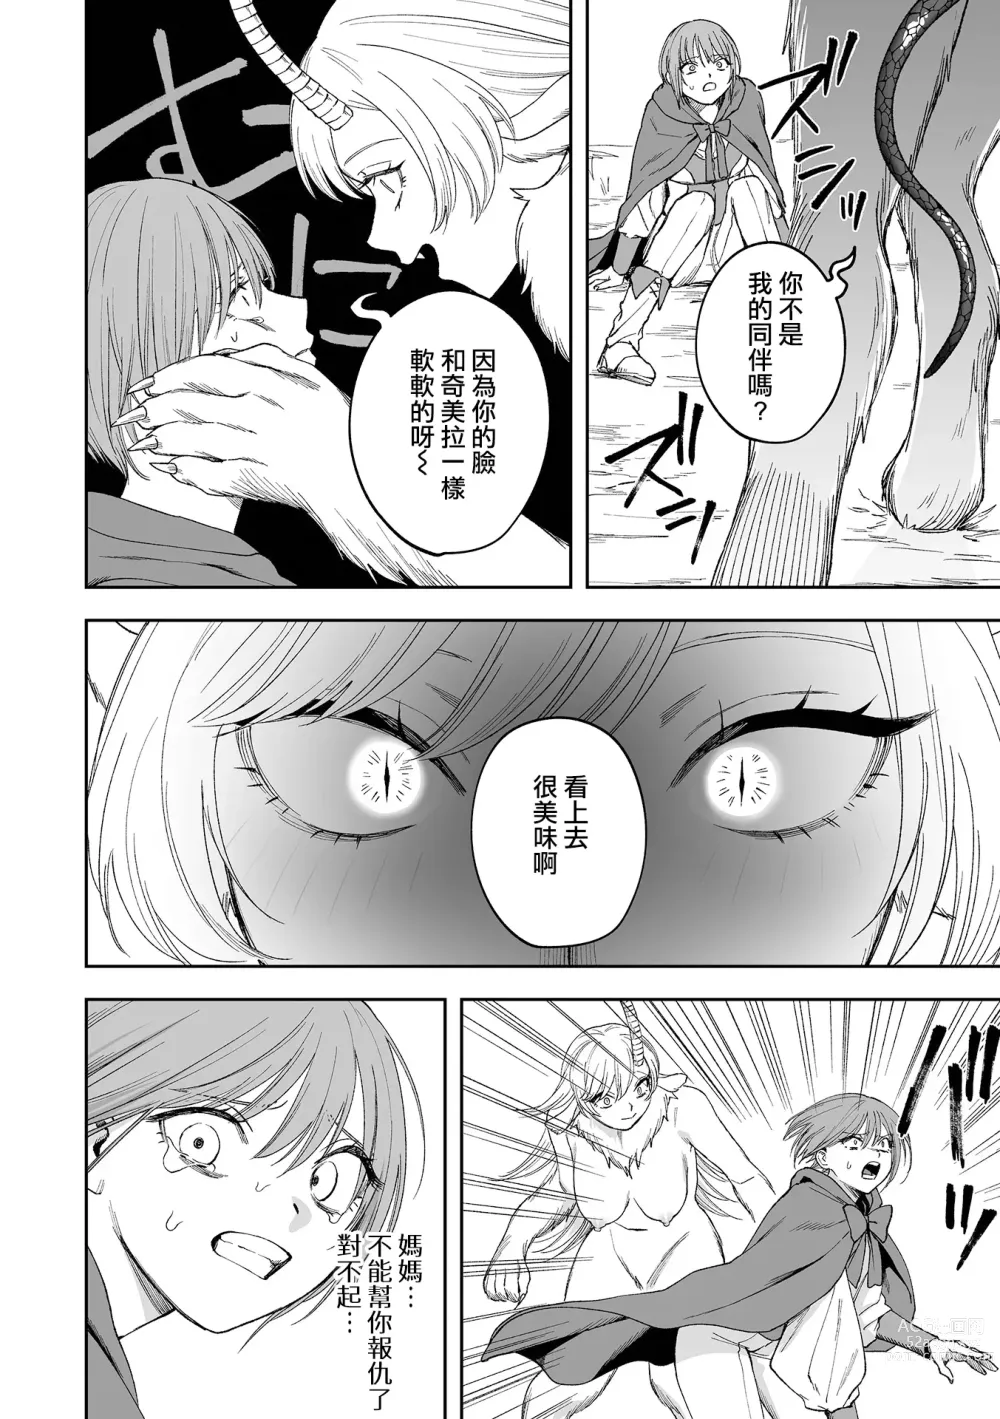 Page 7 of manga Chimera no Sumu Mori